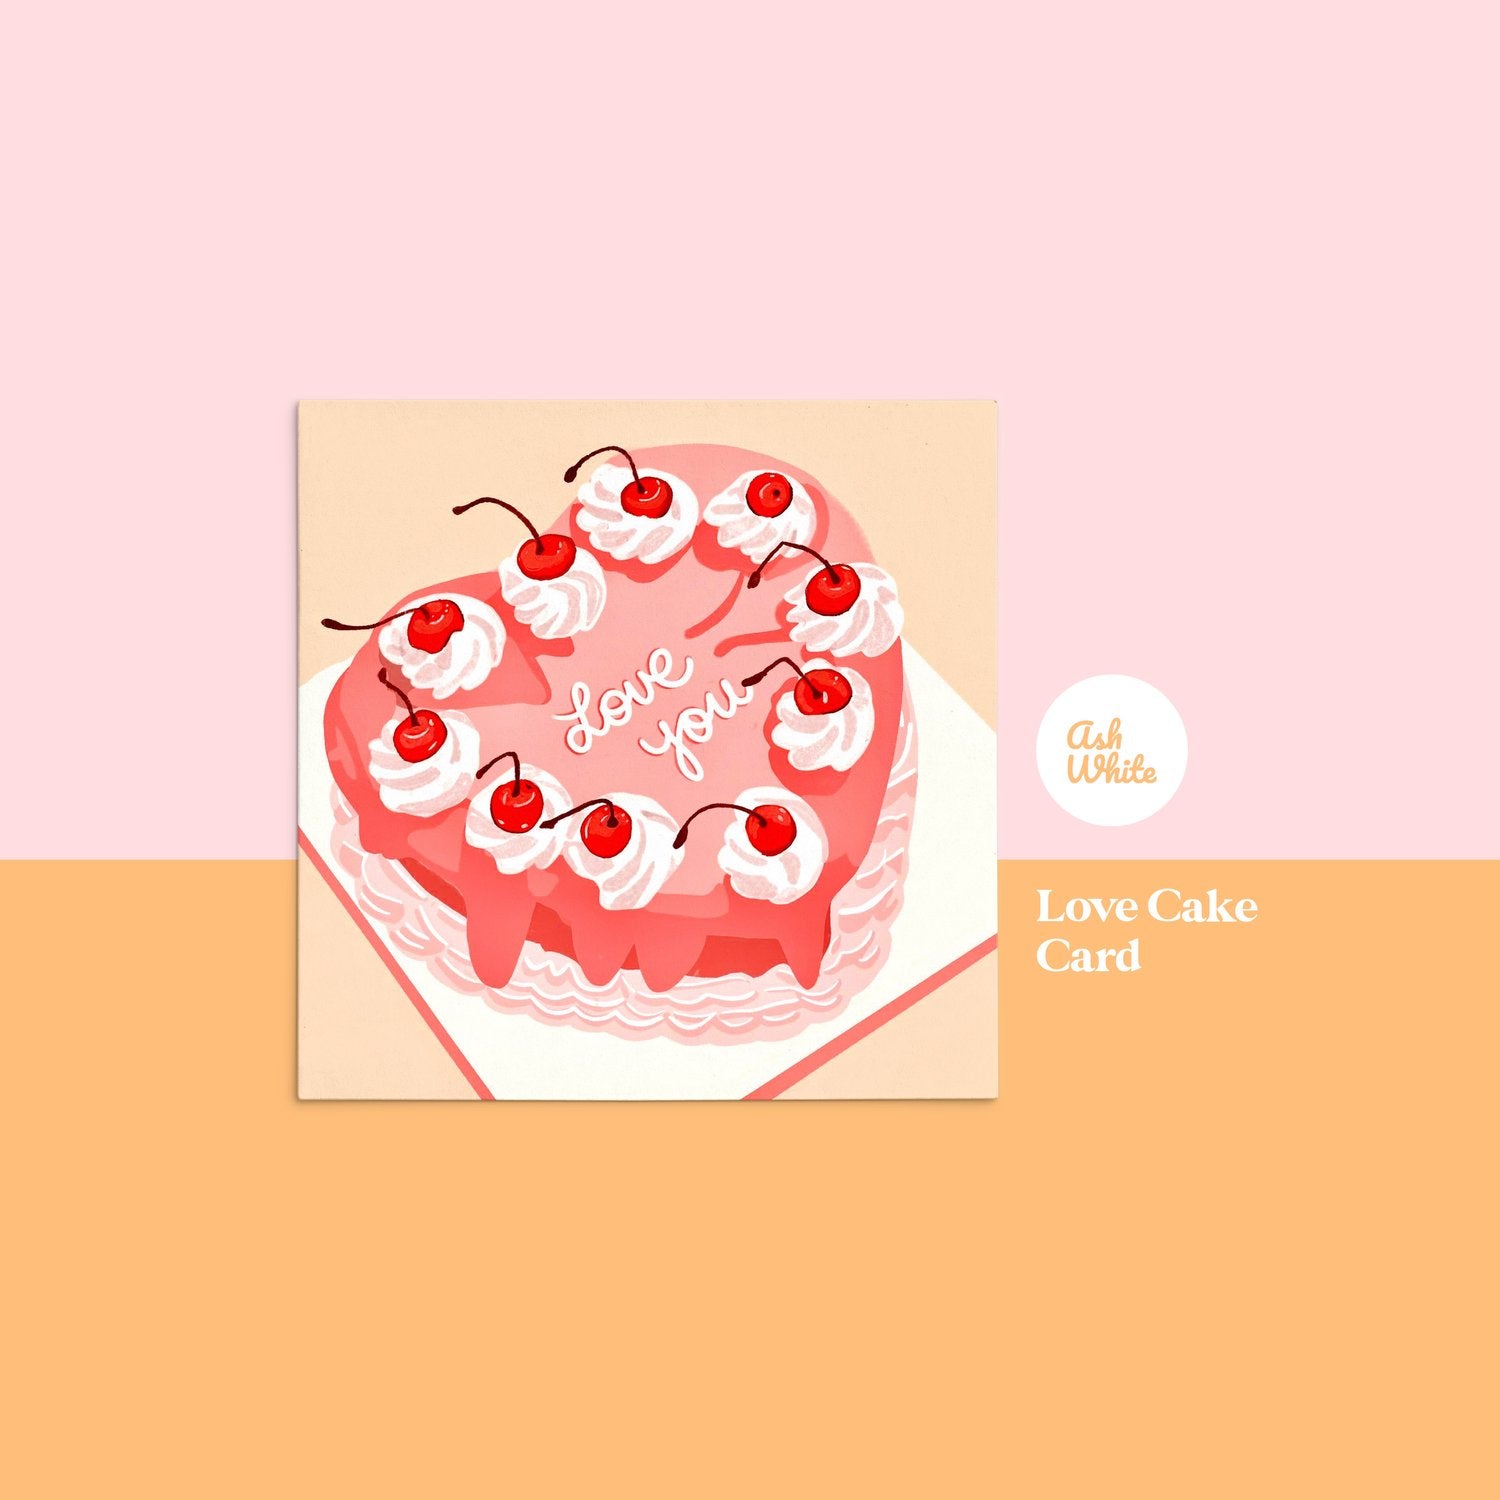 LOVE CAKE CARD by Ash White